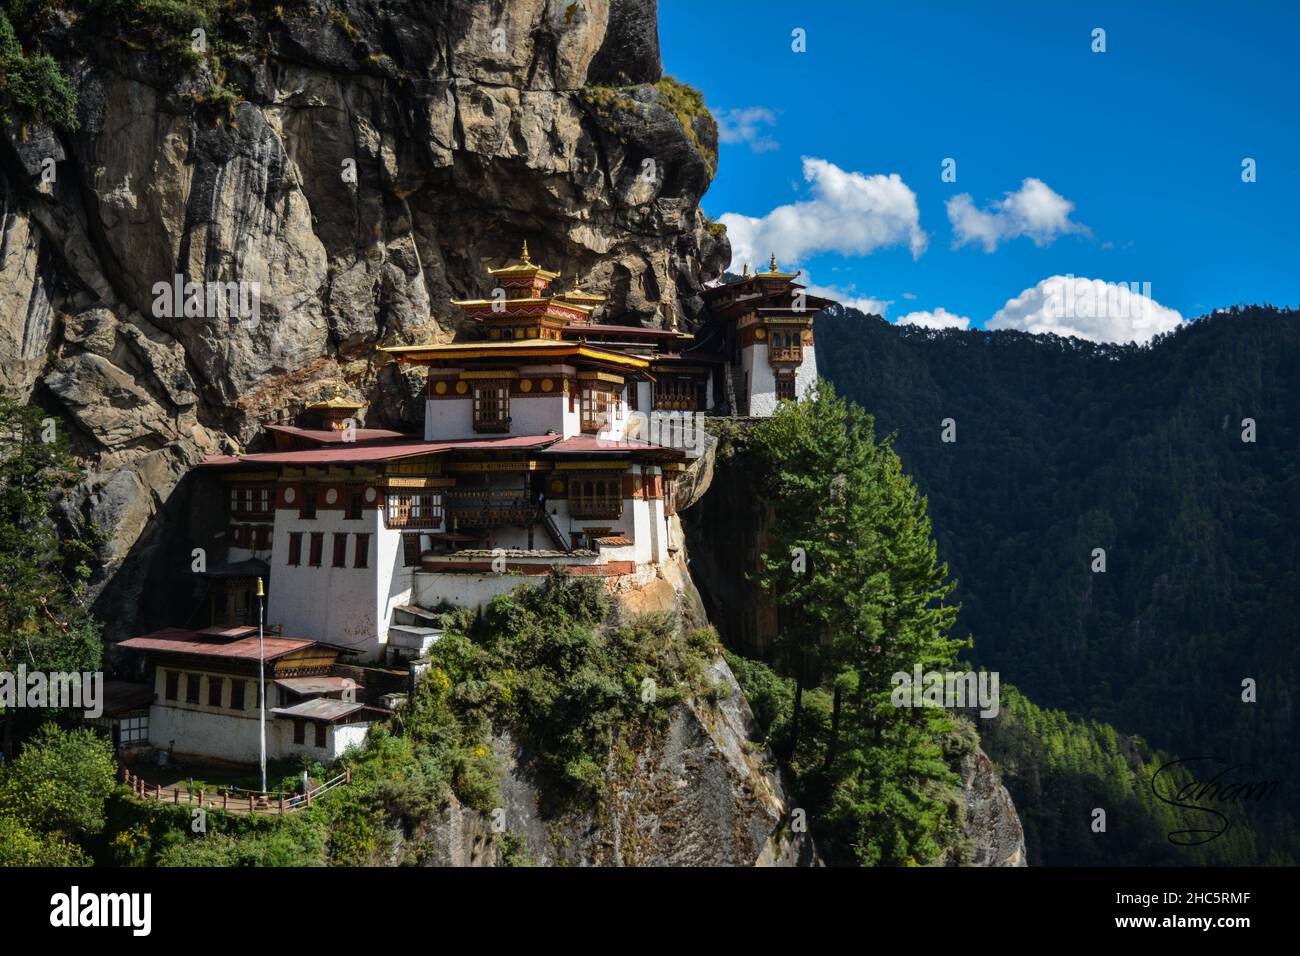 Aerial shot of the beautiful Taktsang Palphug Monastery in Paro, Bhutan surrounded by greenery Stock Photo